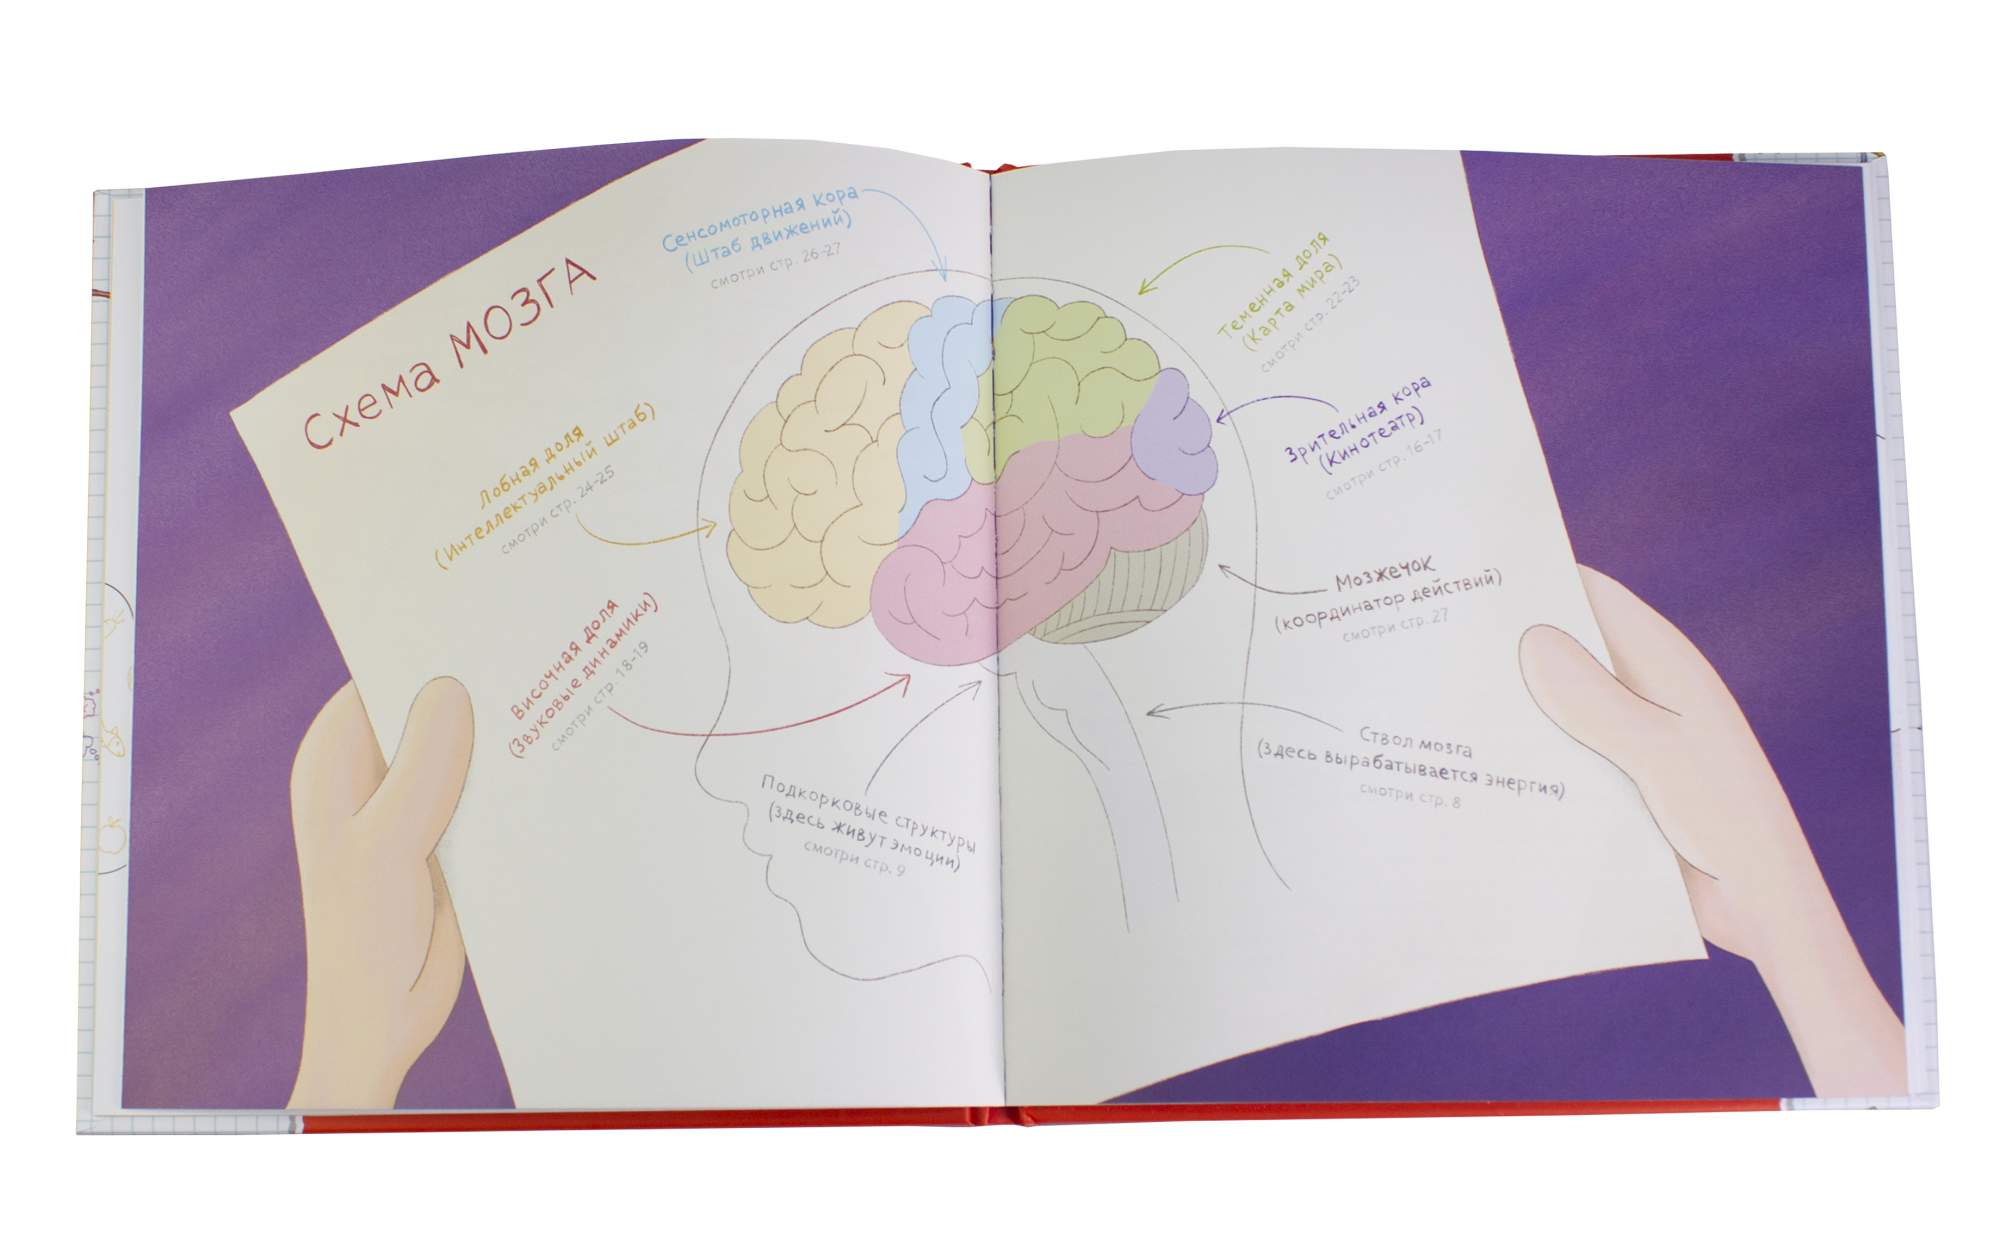 Книги мозг детей